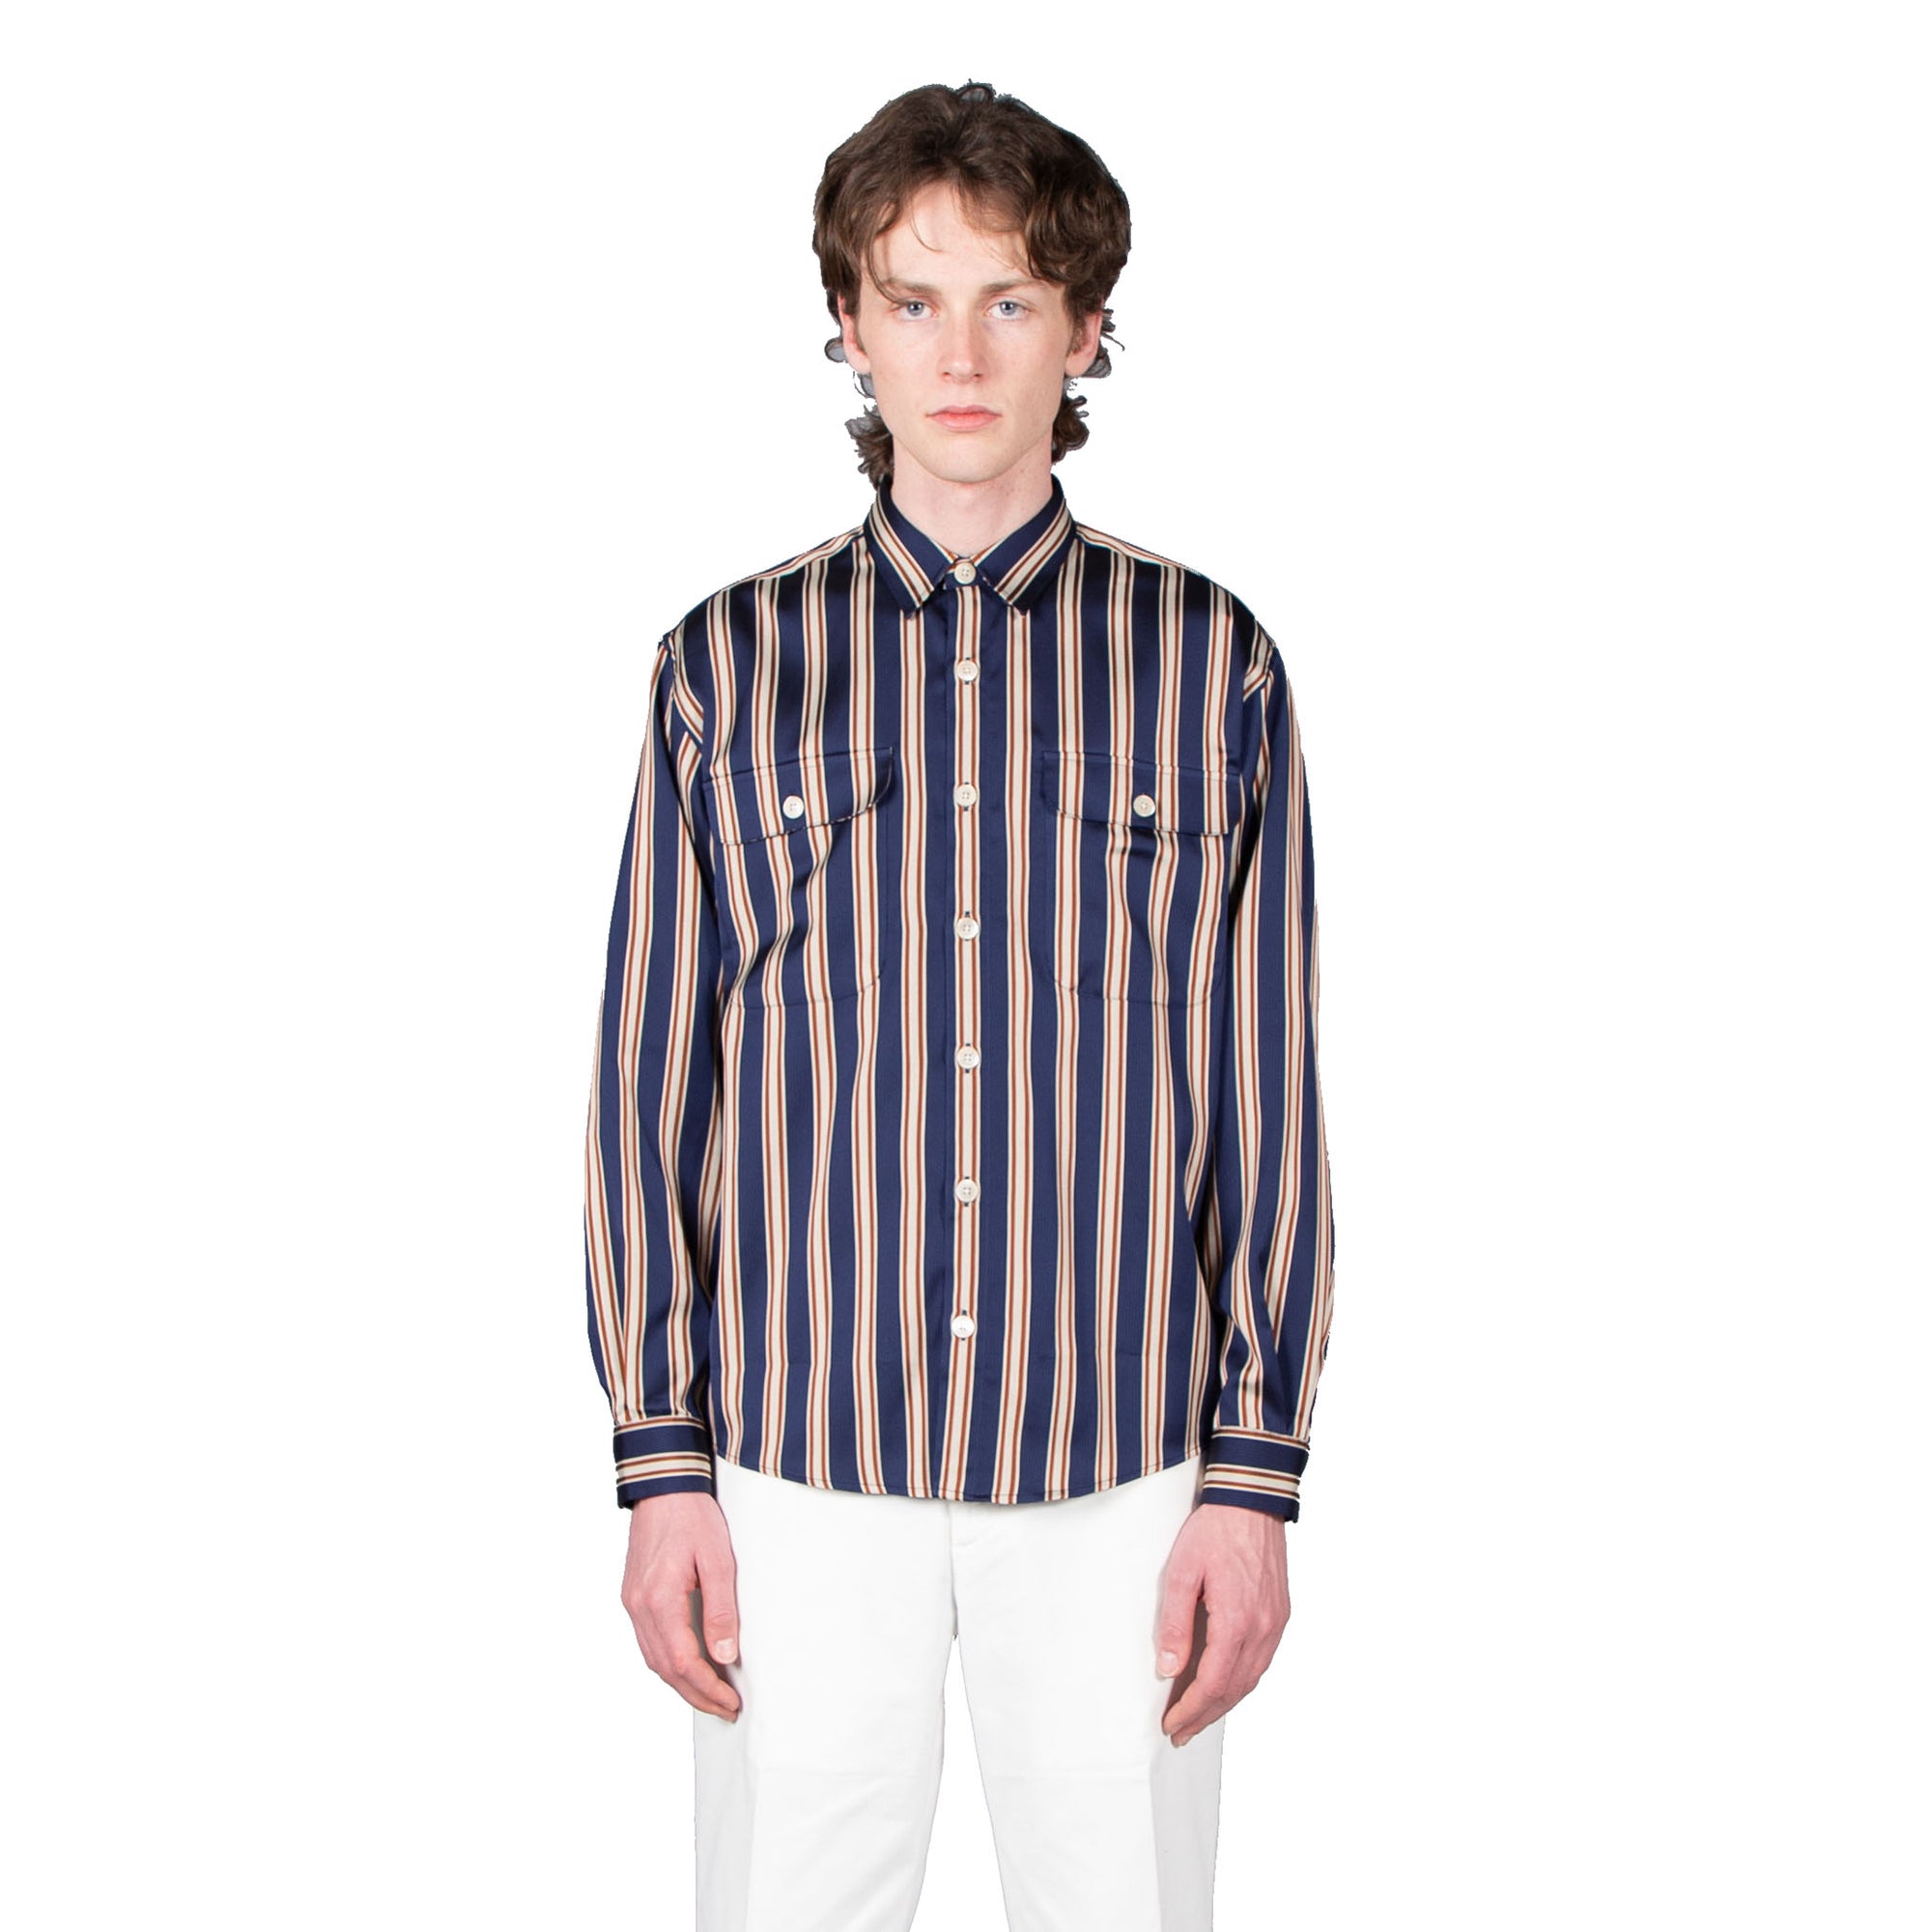 Shop Schnayderman's shirt online boxy stripe navy rust sand